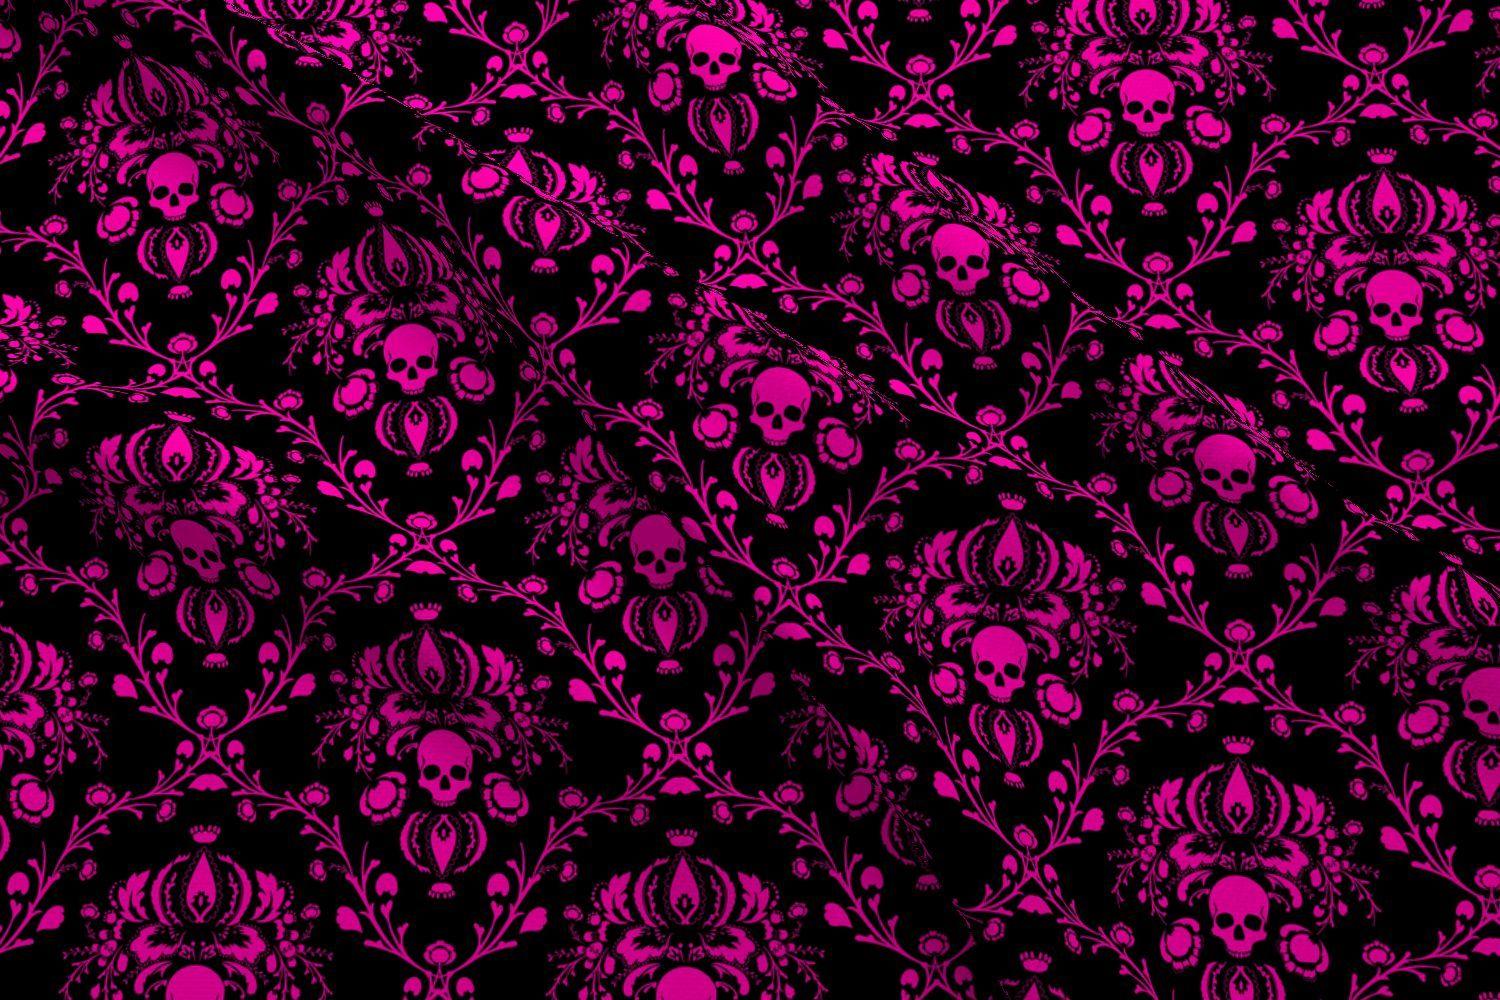 Pink and black damask wallpaper 3434241